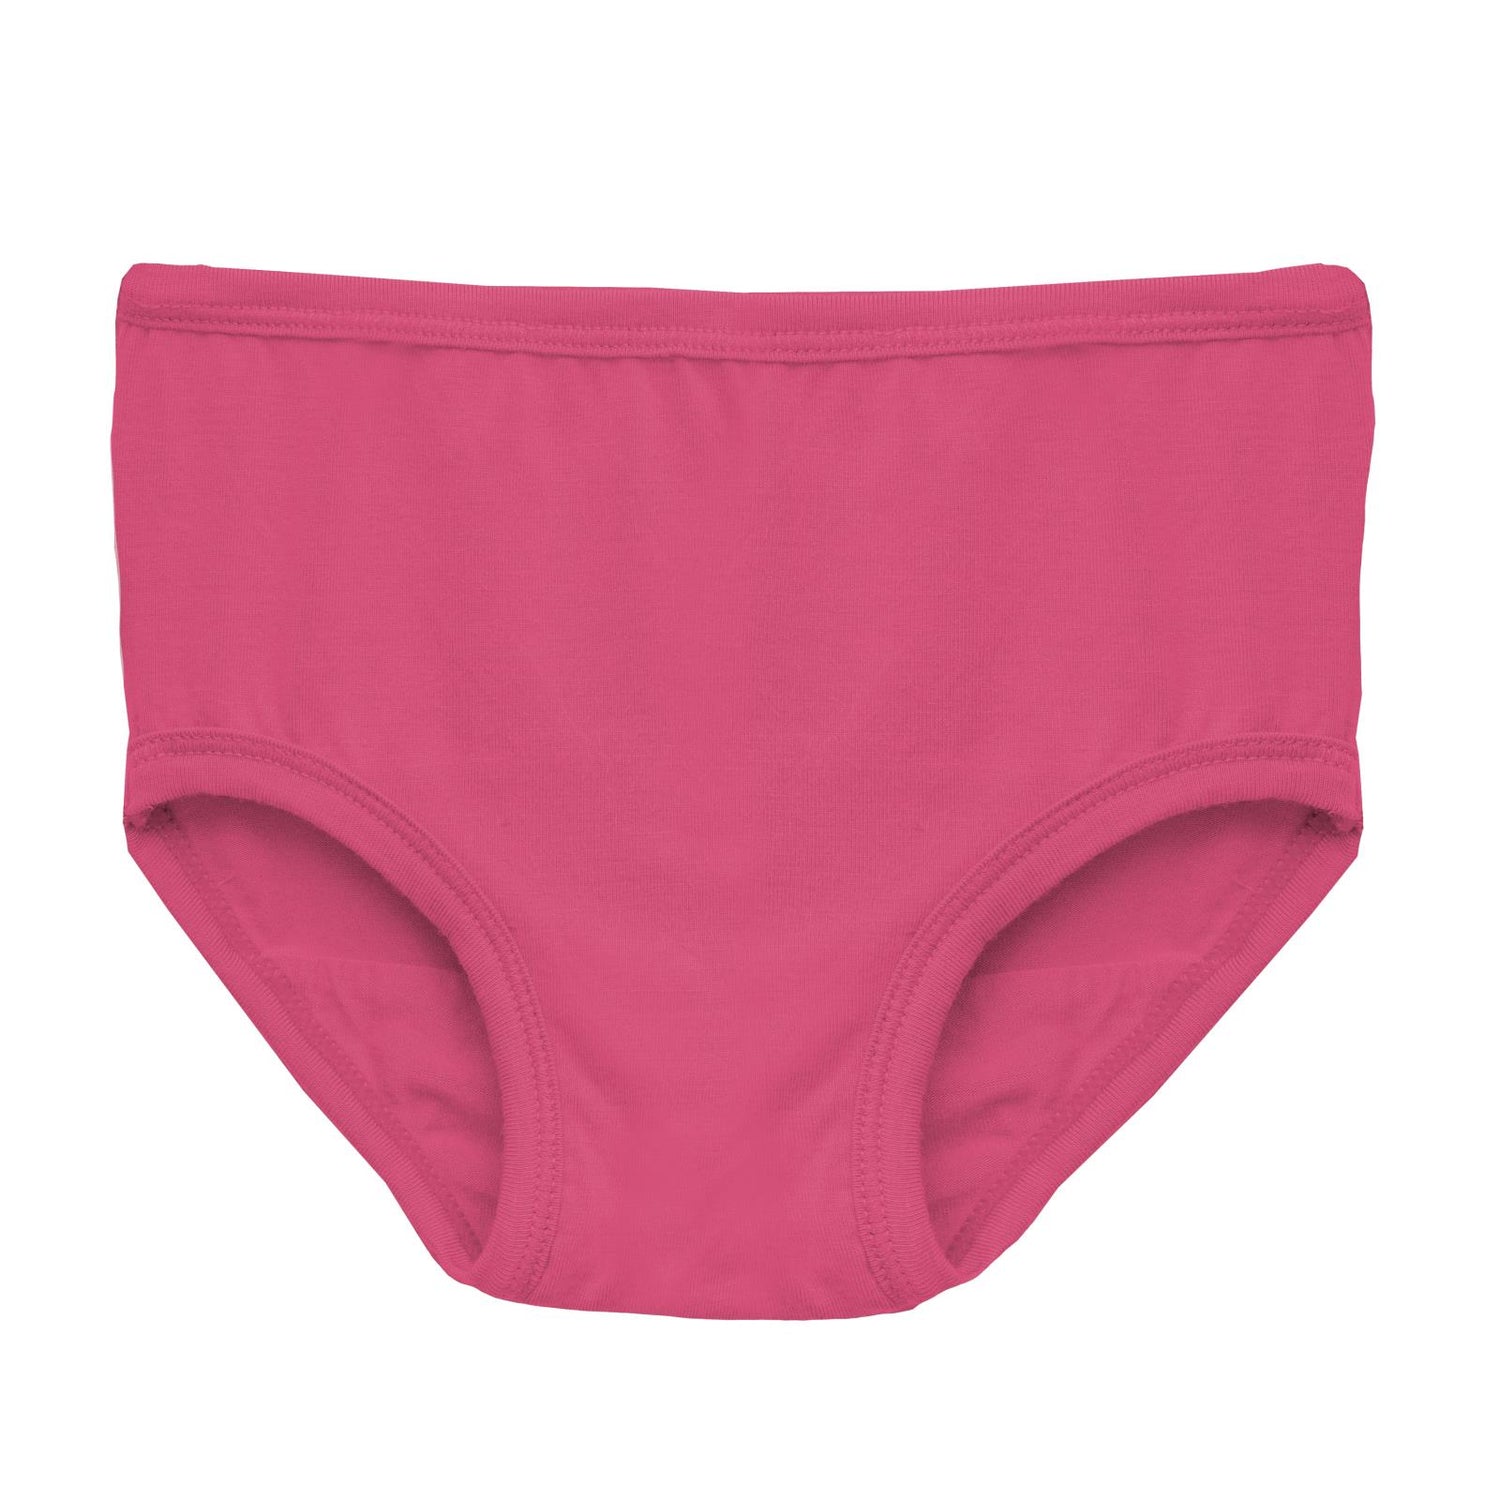 Underwear in Flamingo